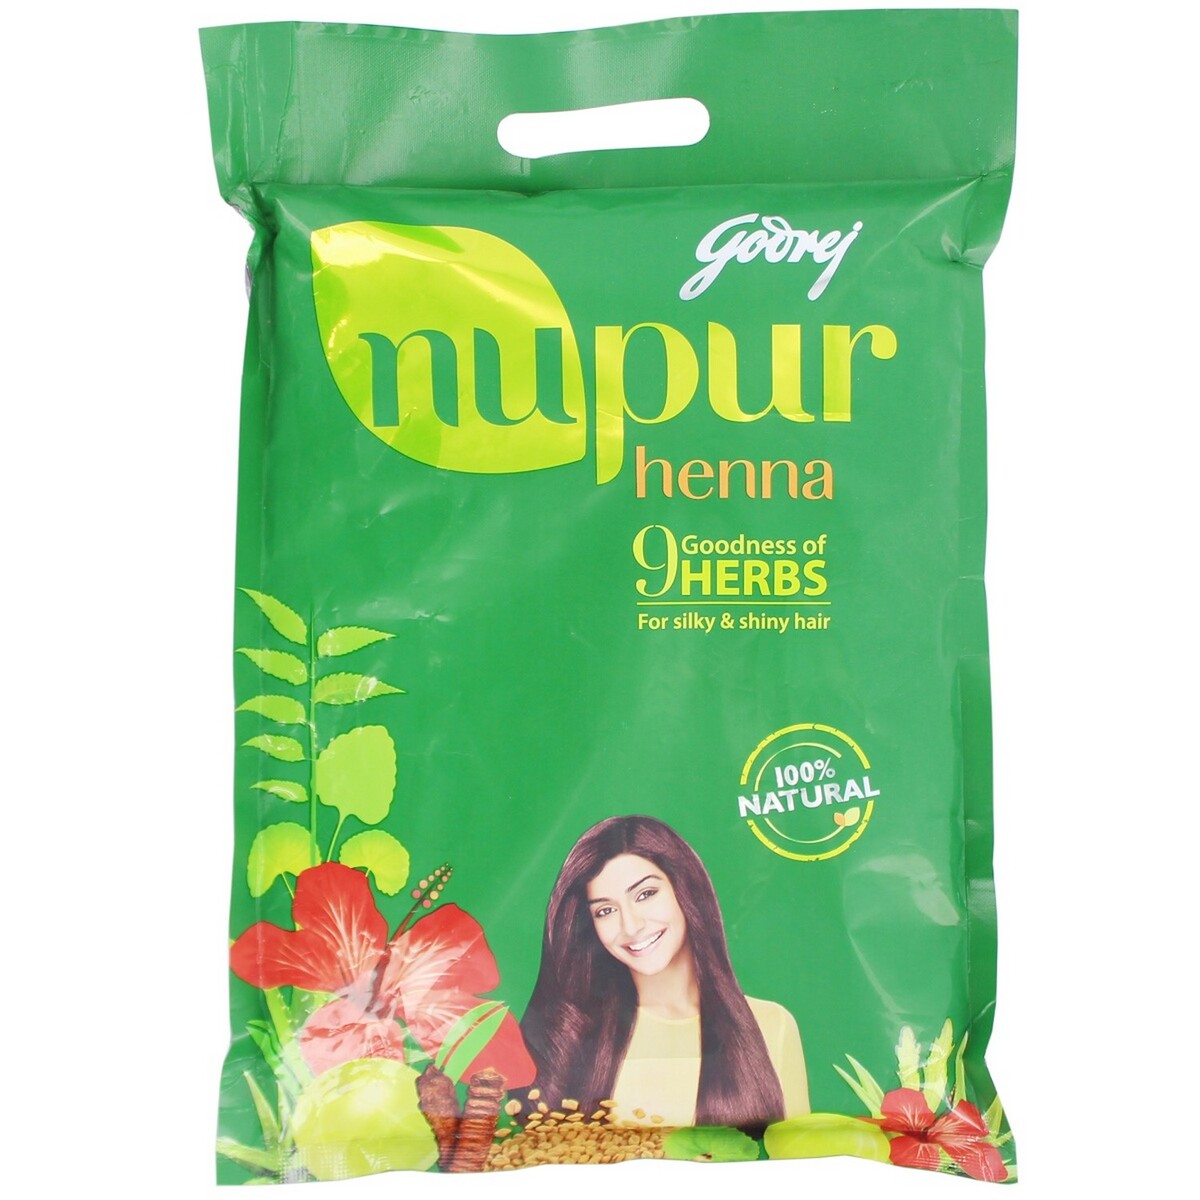 Buy Godrej Nupur Henna 500g Online - Lulu Hypermarket India